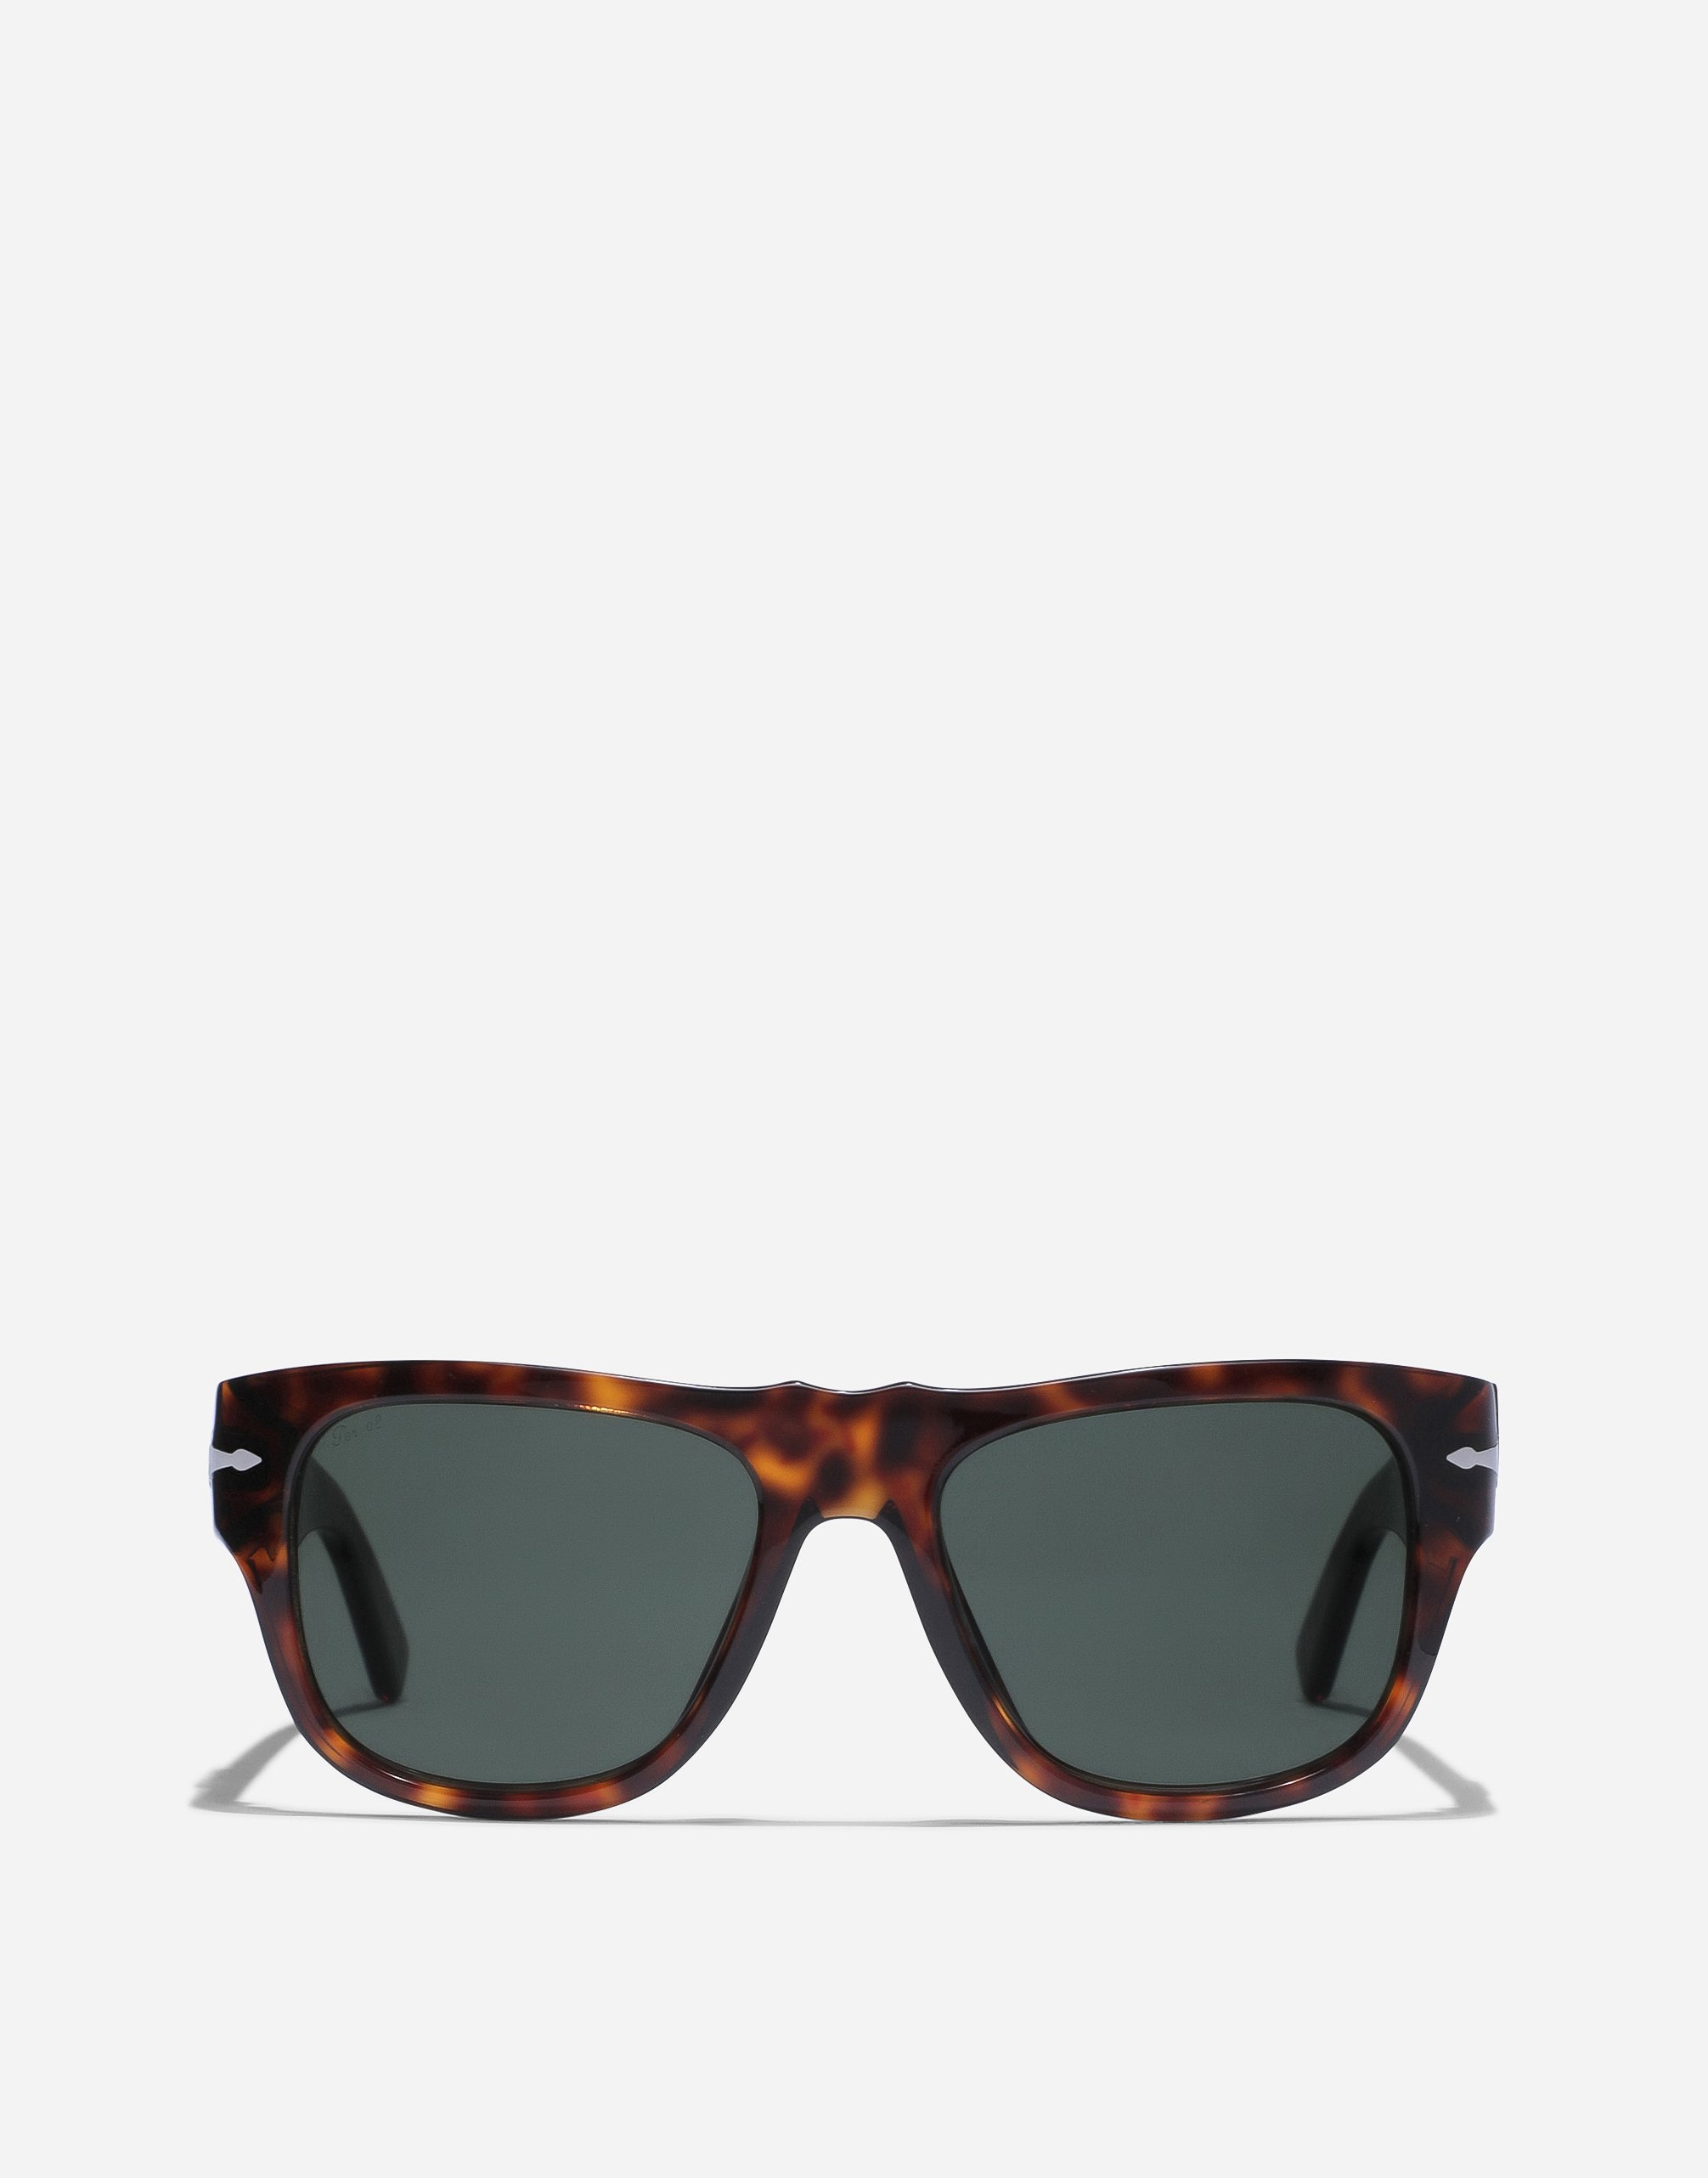 Dolce&Gabbana x Persol sunglasses in havana